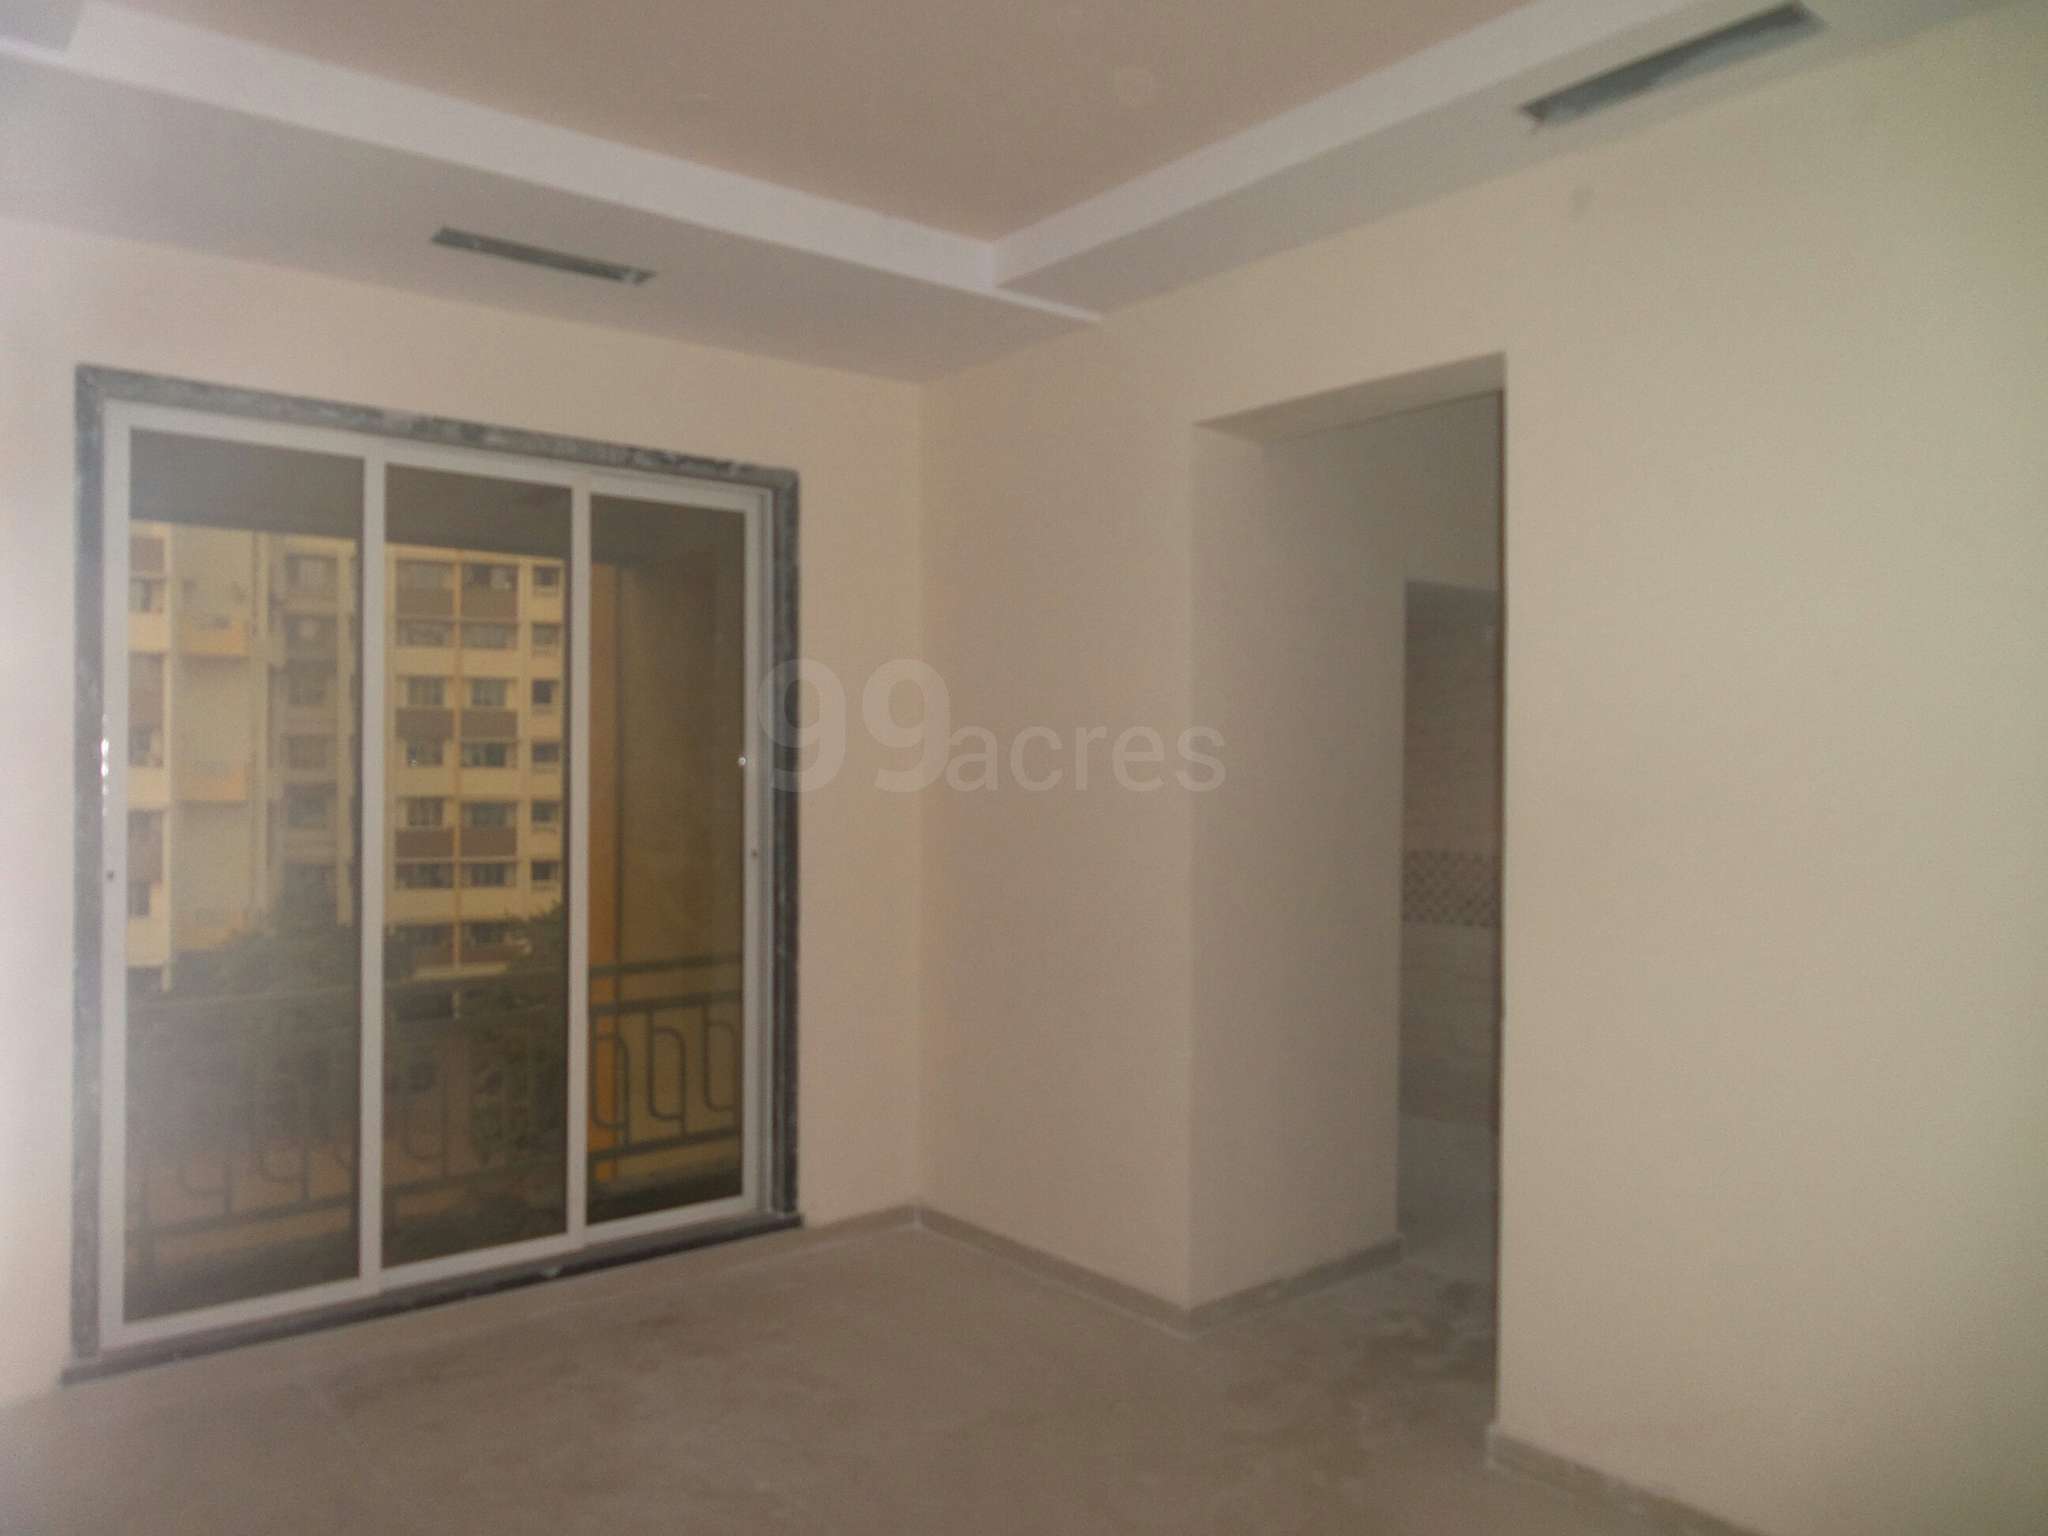 Residential Multistorey Apartment for Sale in Shirgaon, Badlapur (E) , Badlapur-West, Mumbai